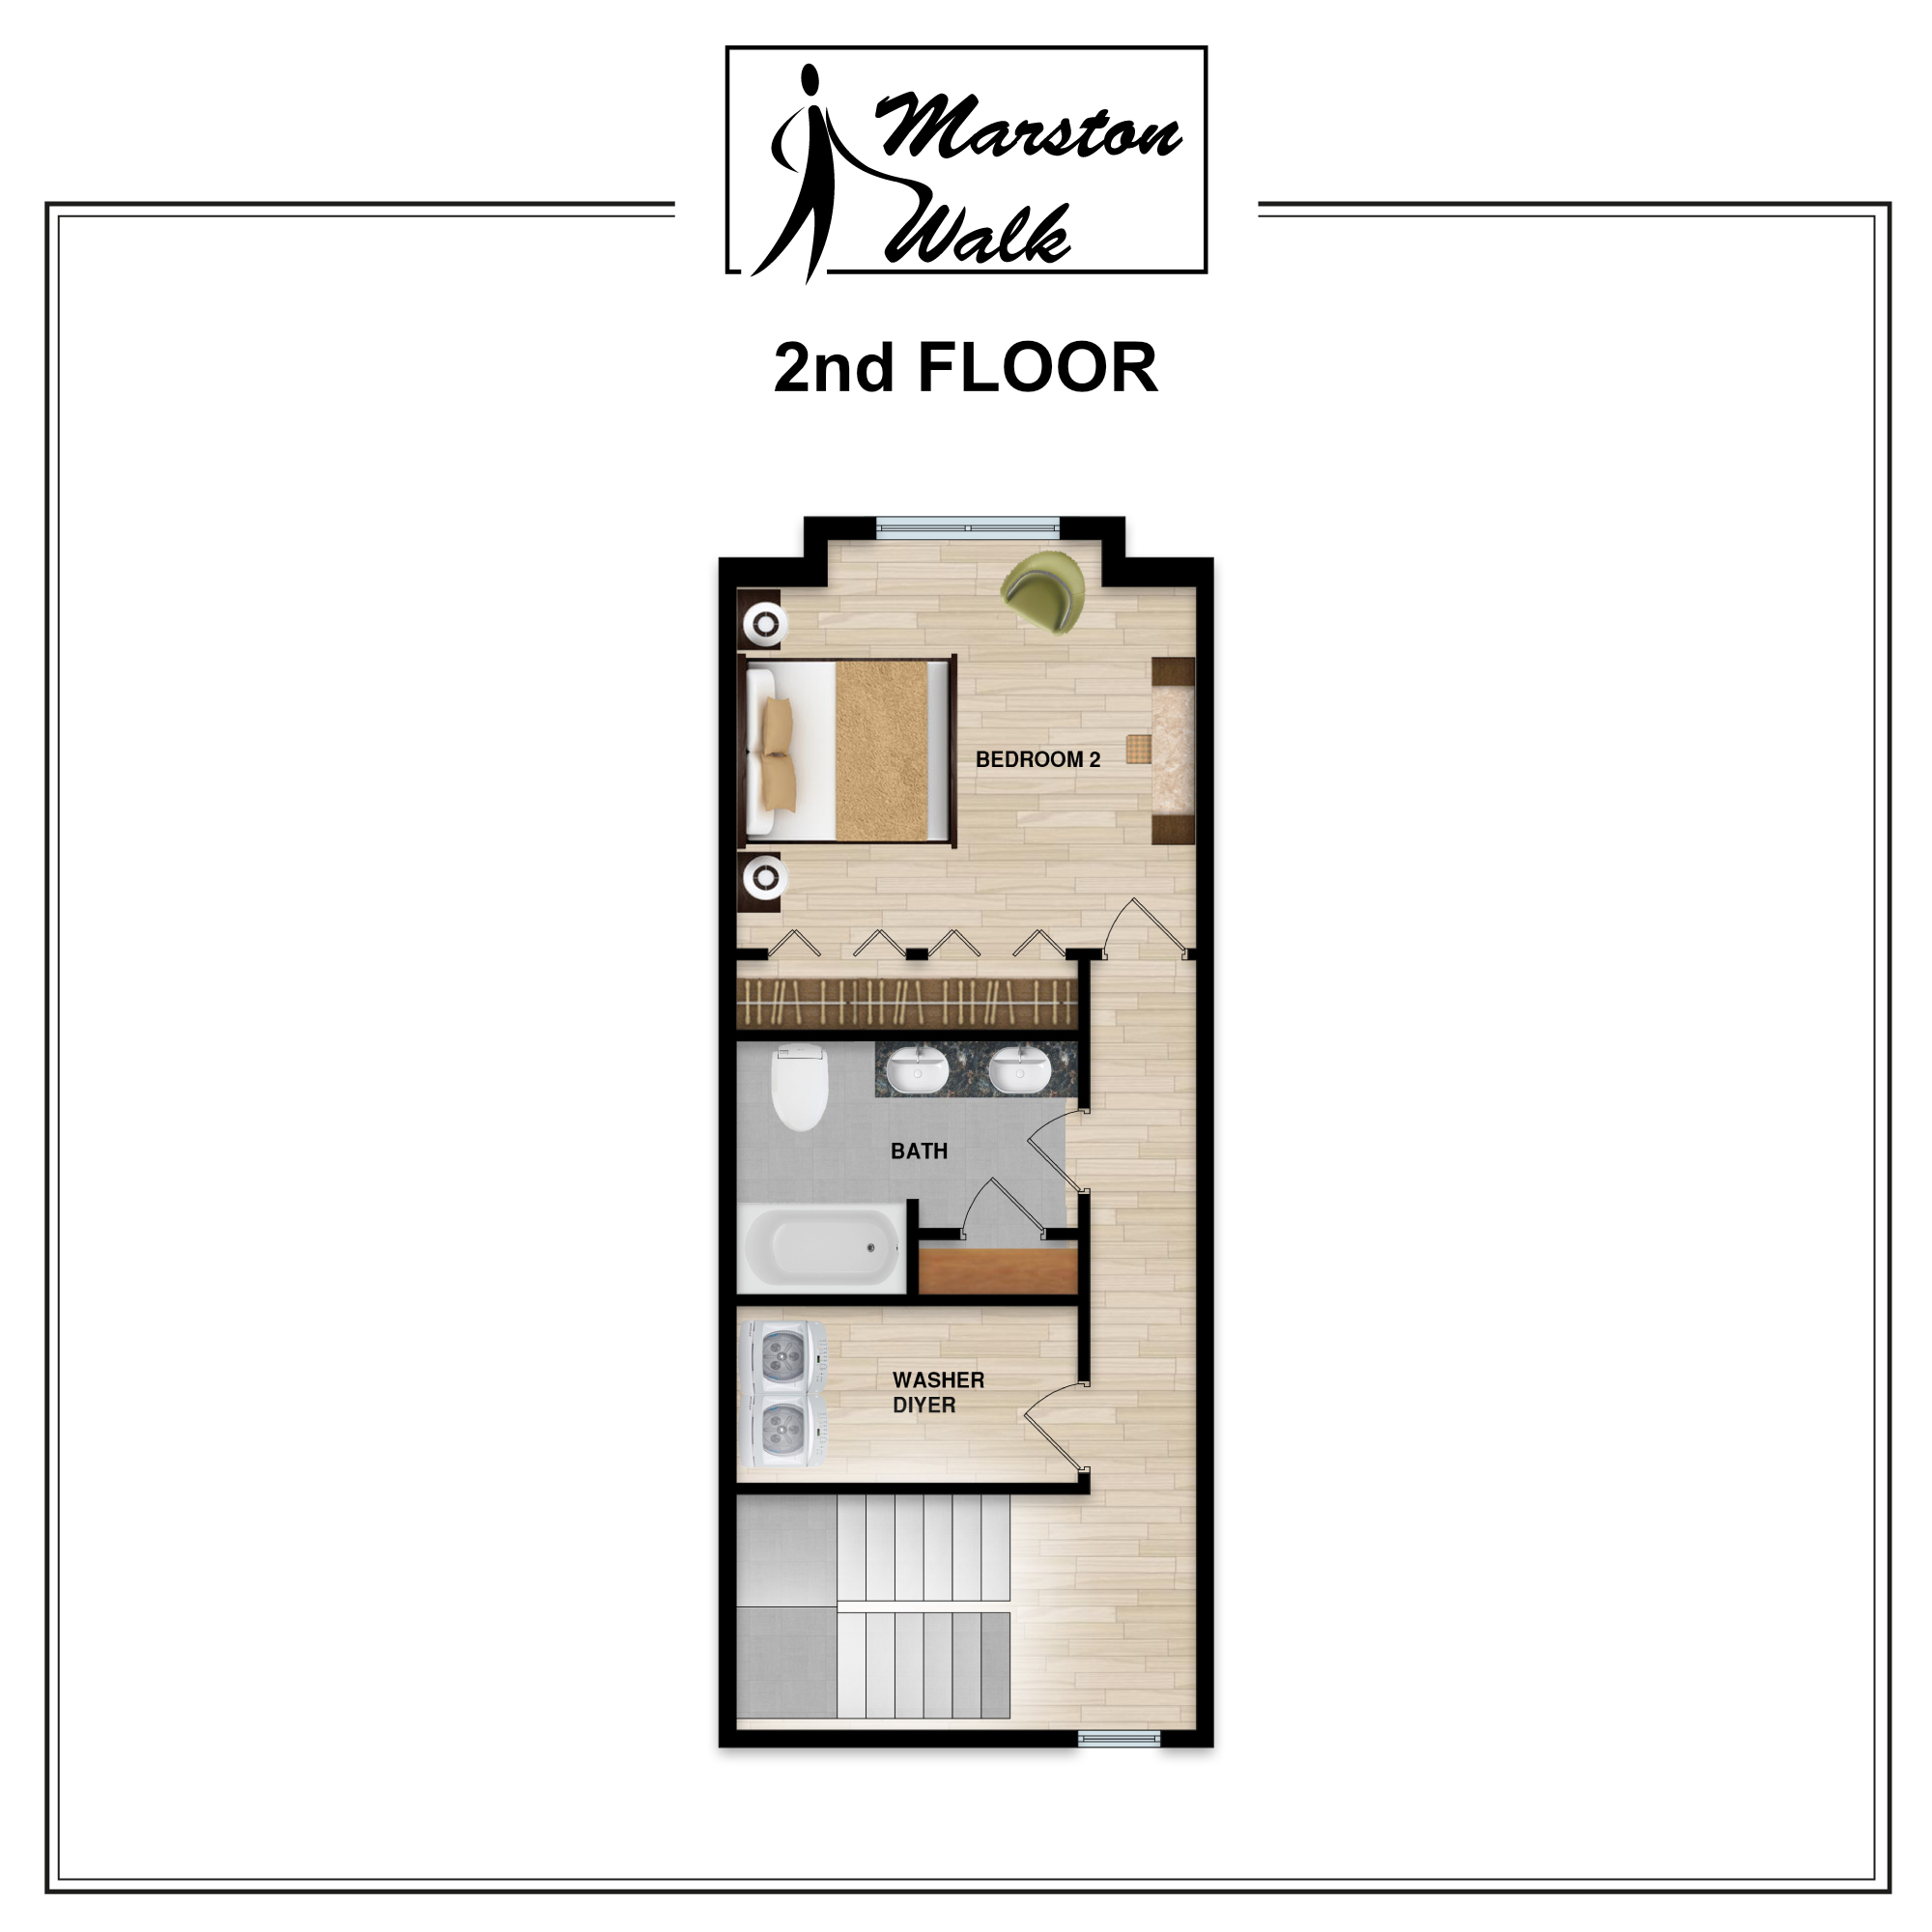 marston-walk_second-floor